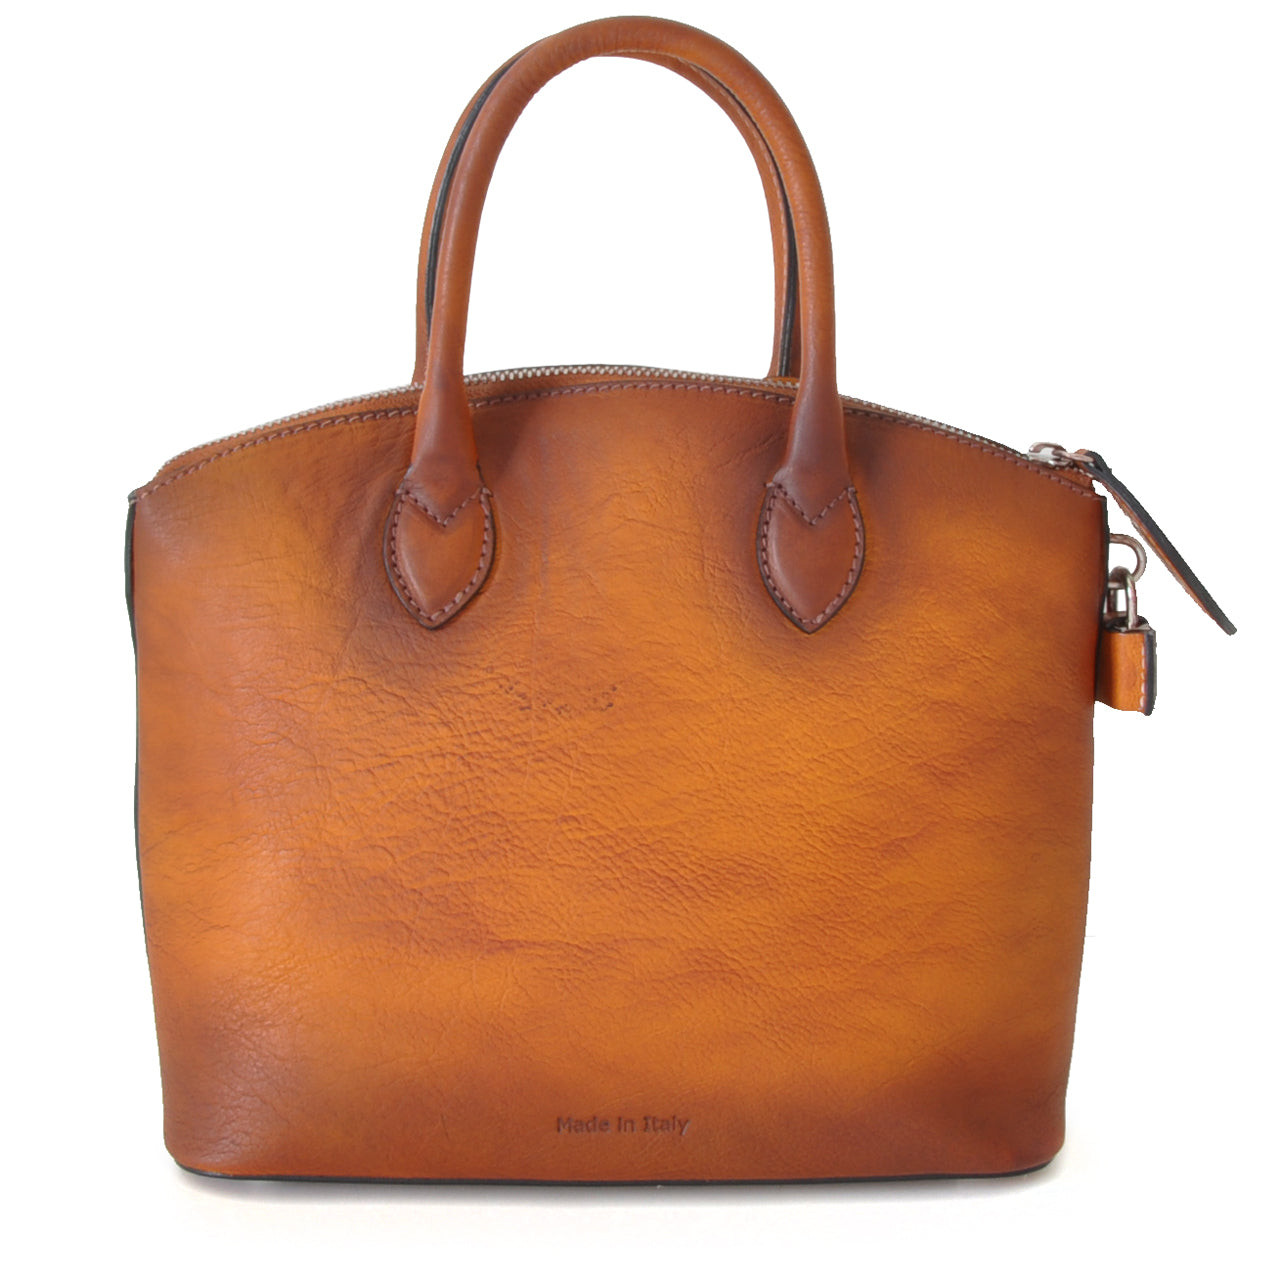 Pratesi Versilia Small Bruce Handbag in genuine Italian leather - Vegetable Tanned Italian Leather chianti